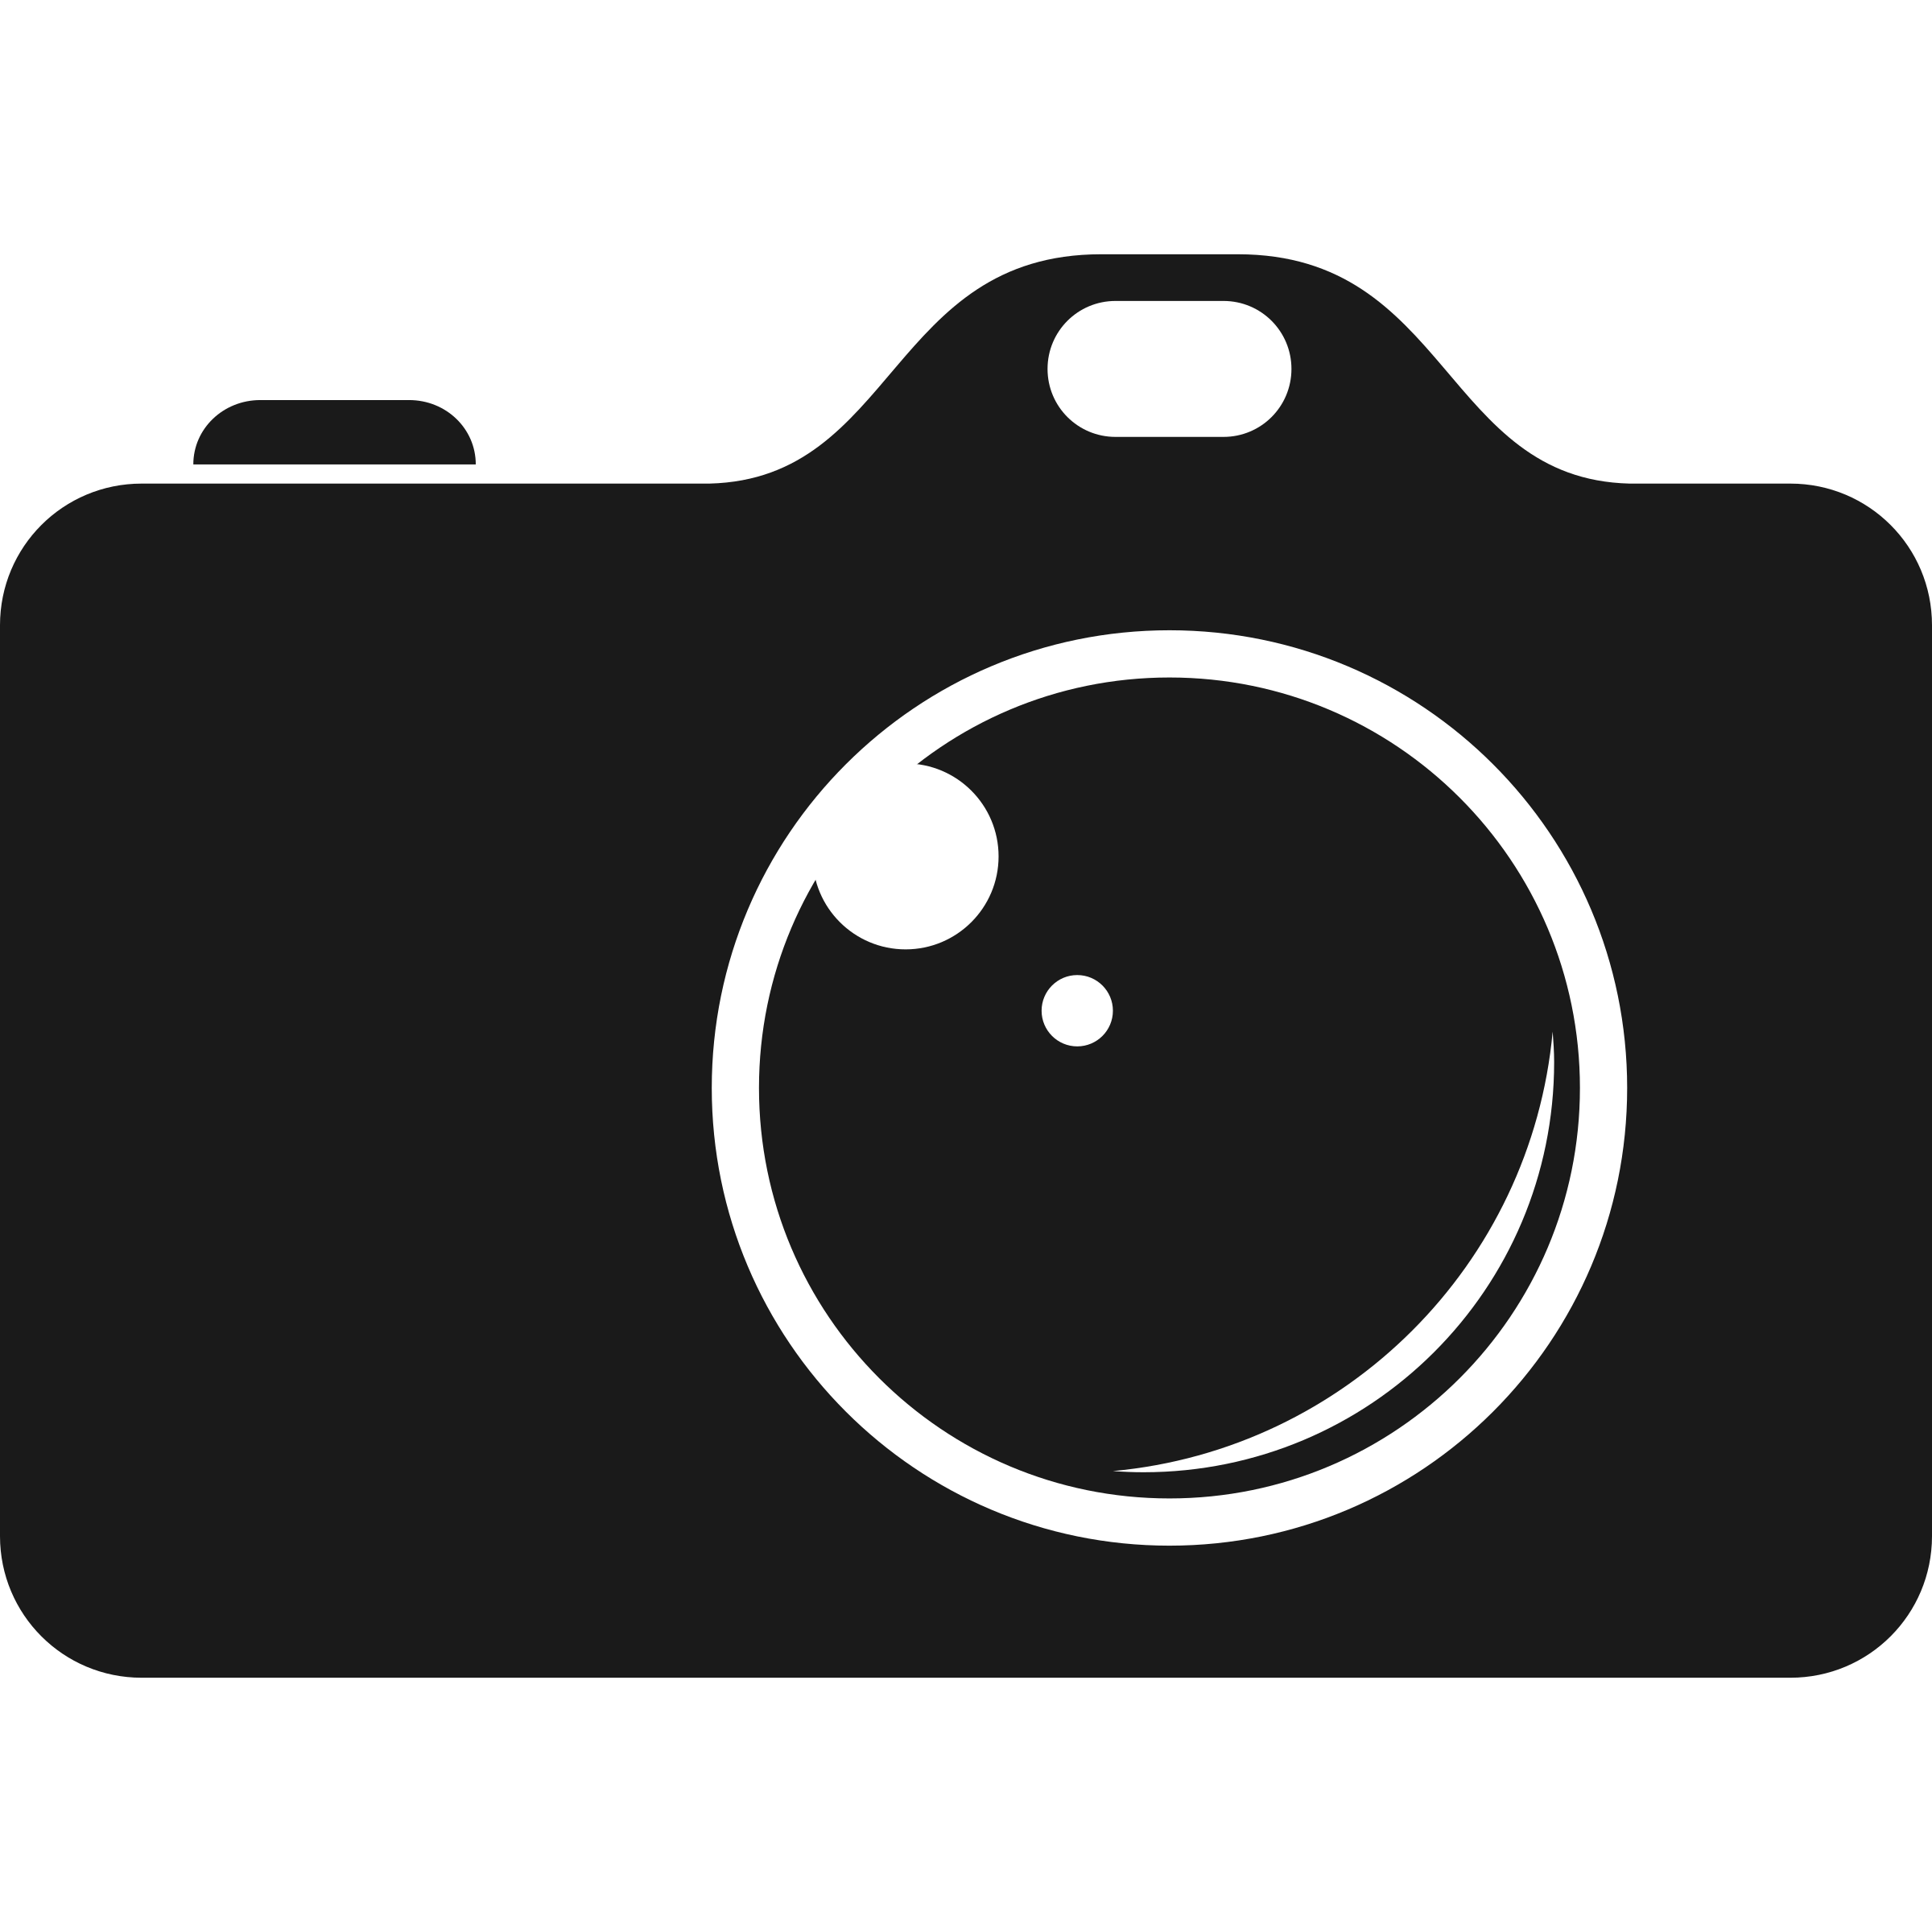 Photograph camera icon - Download Free Vector Art, Stock Graphics 